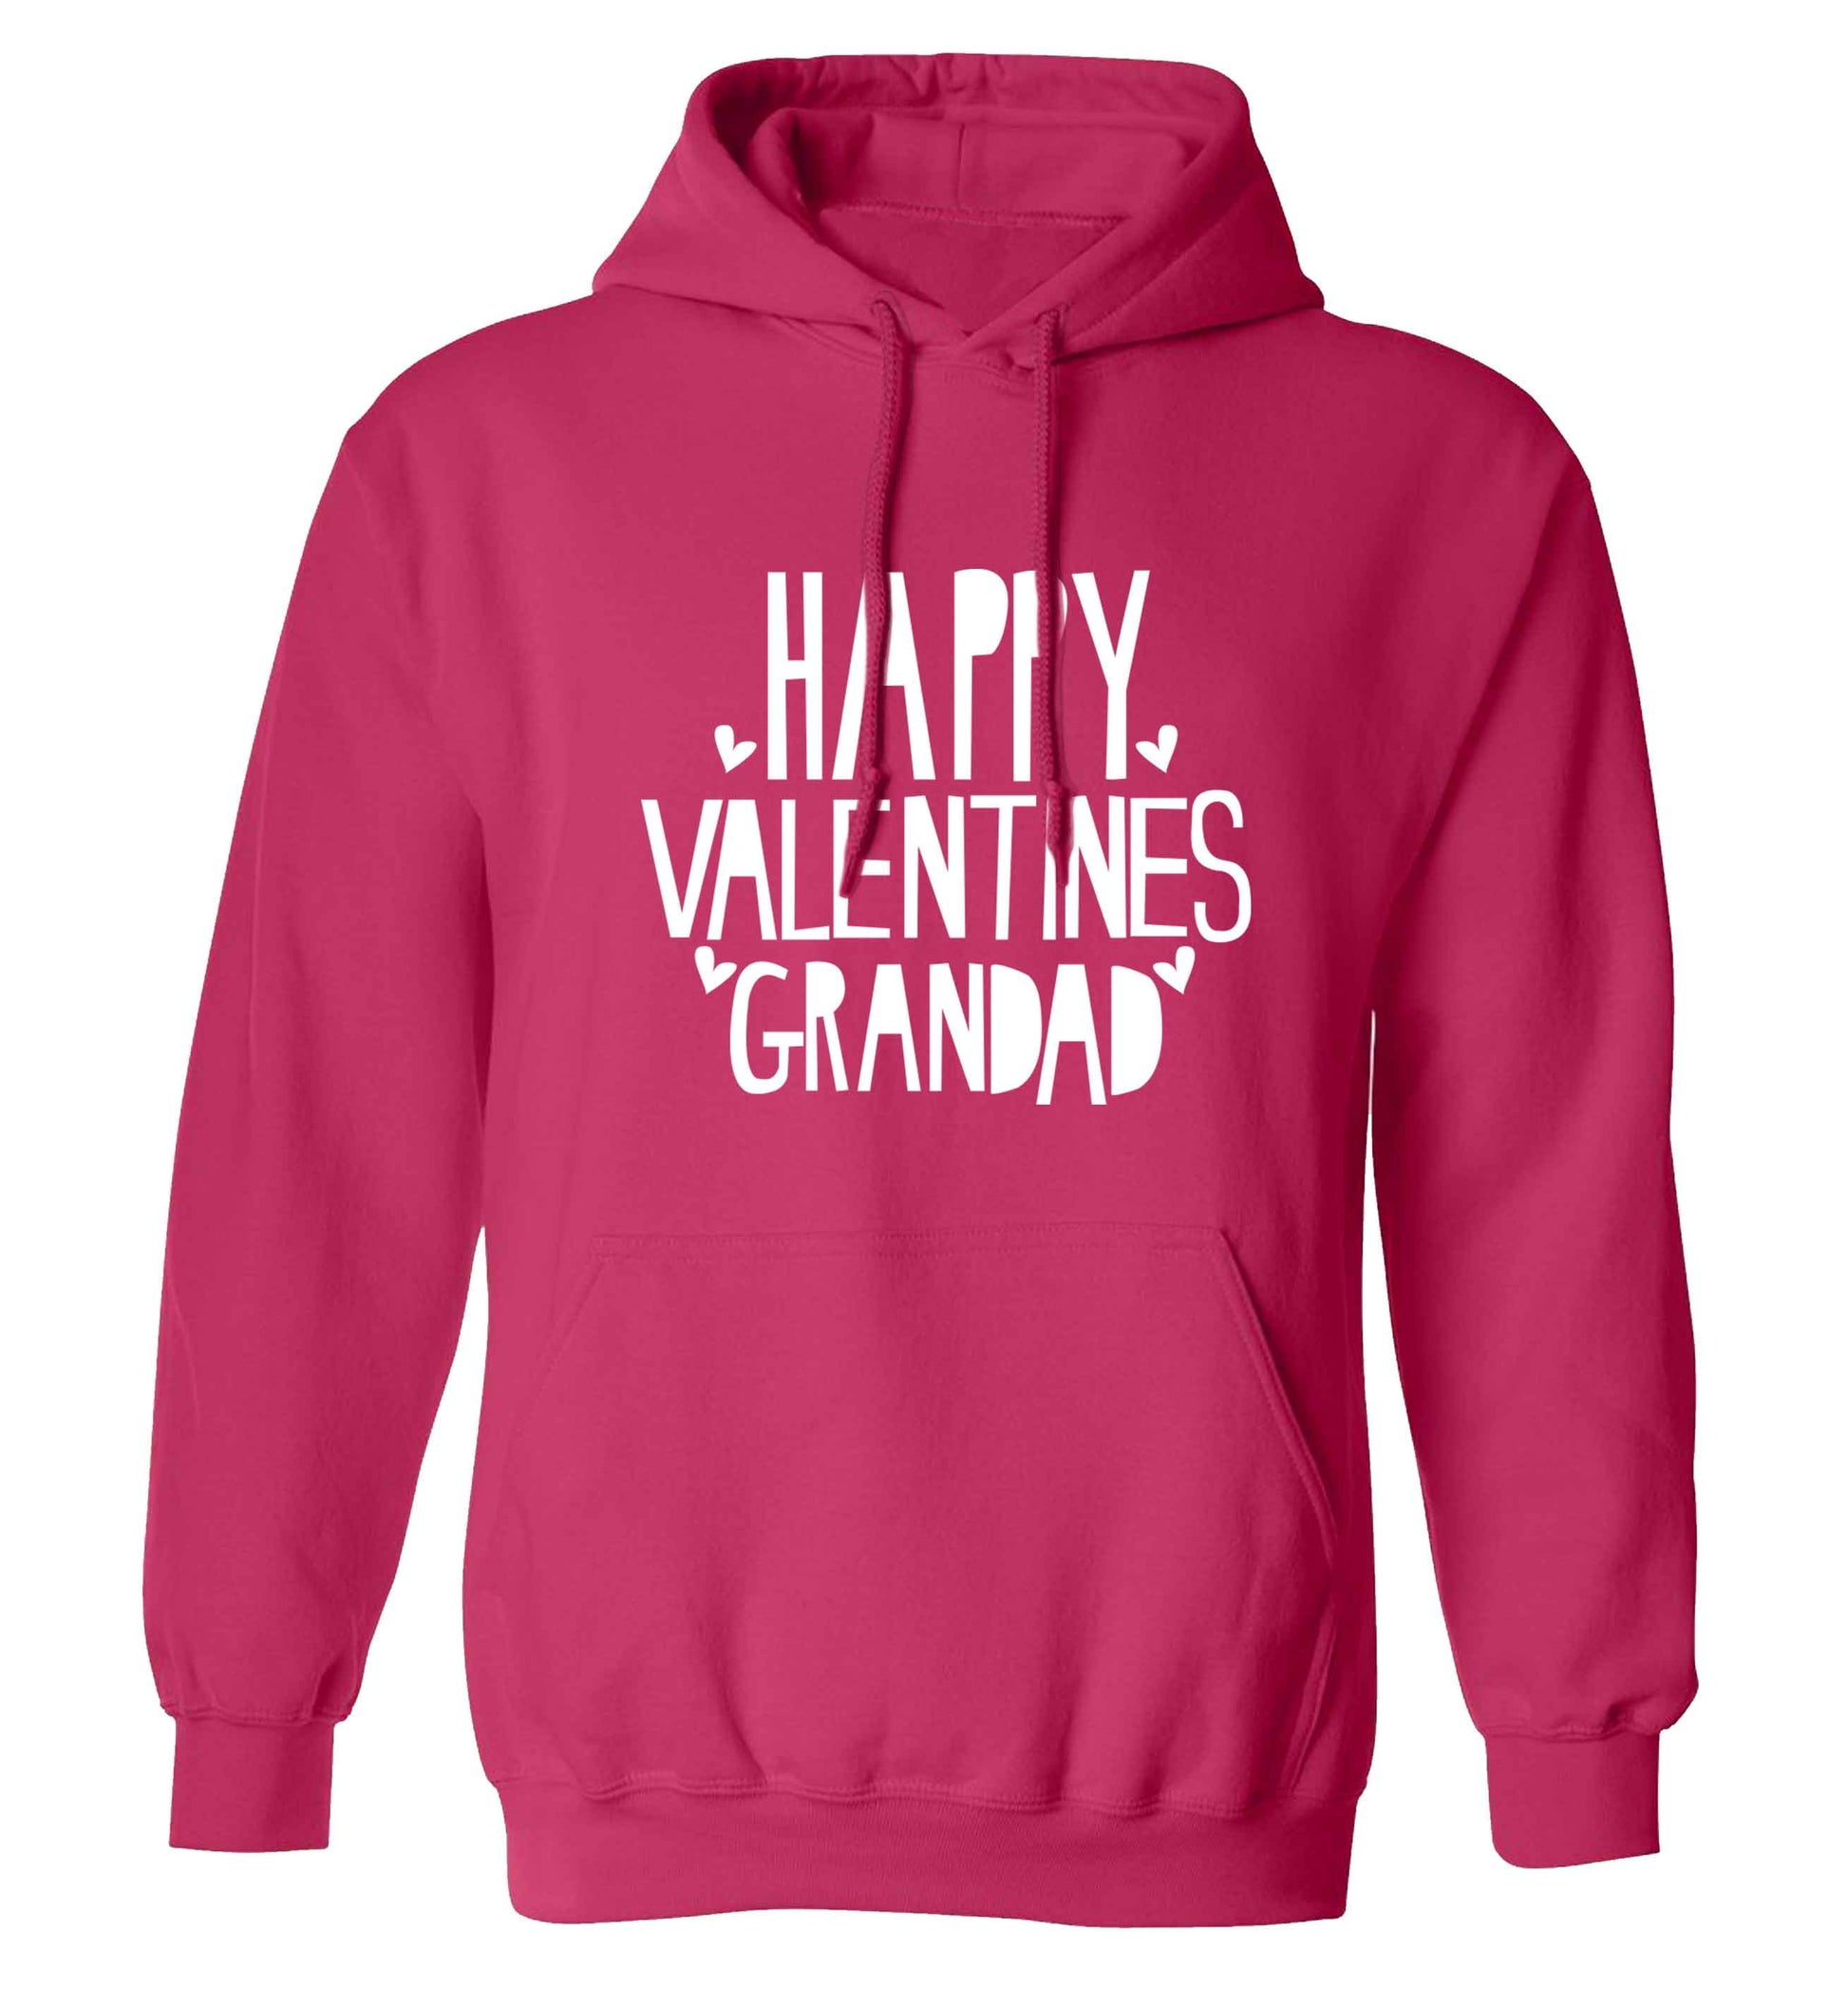 Happy valentines grandad adults unisex pink hoodie 2XL